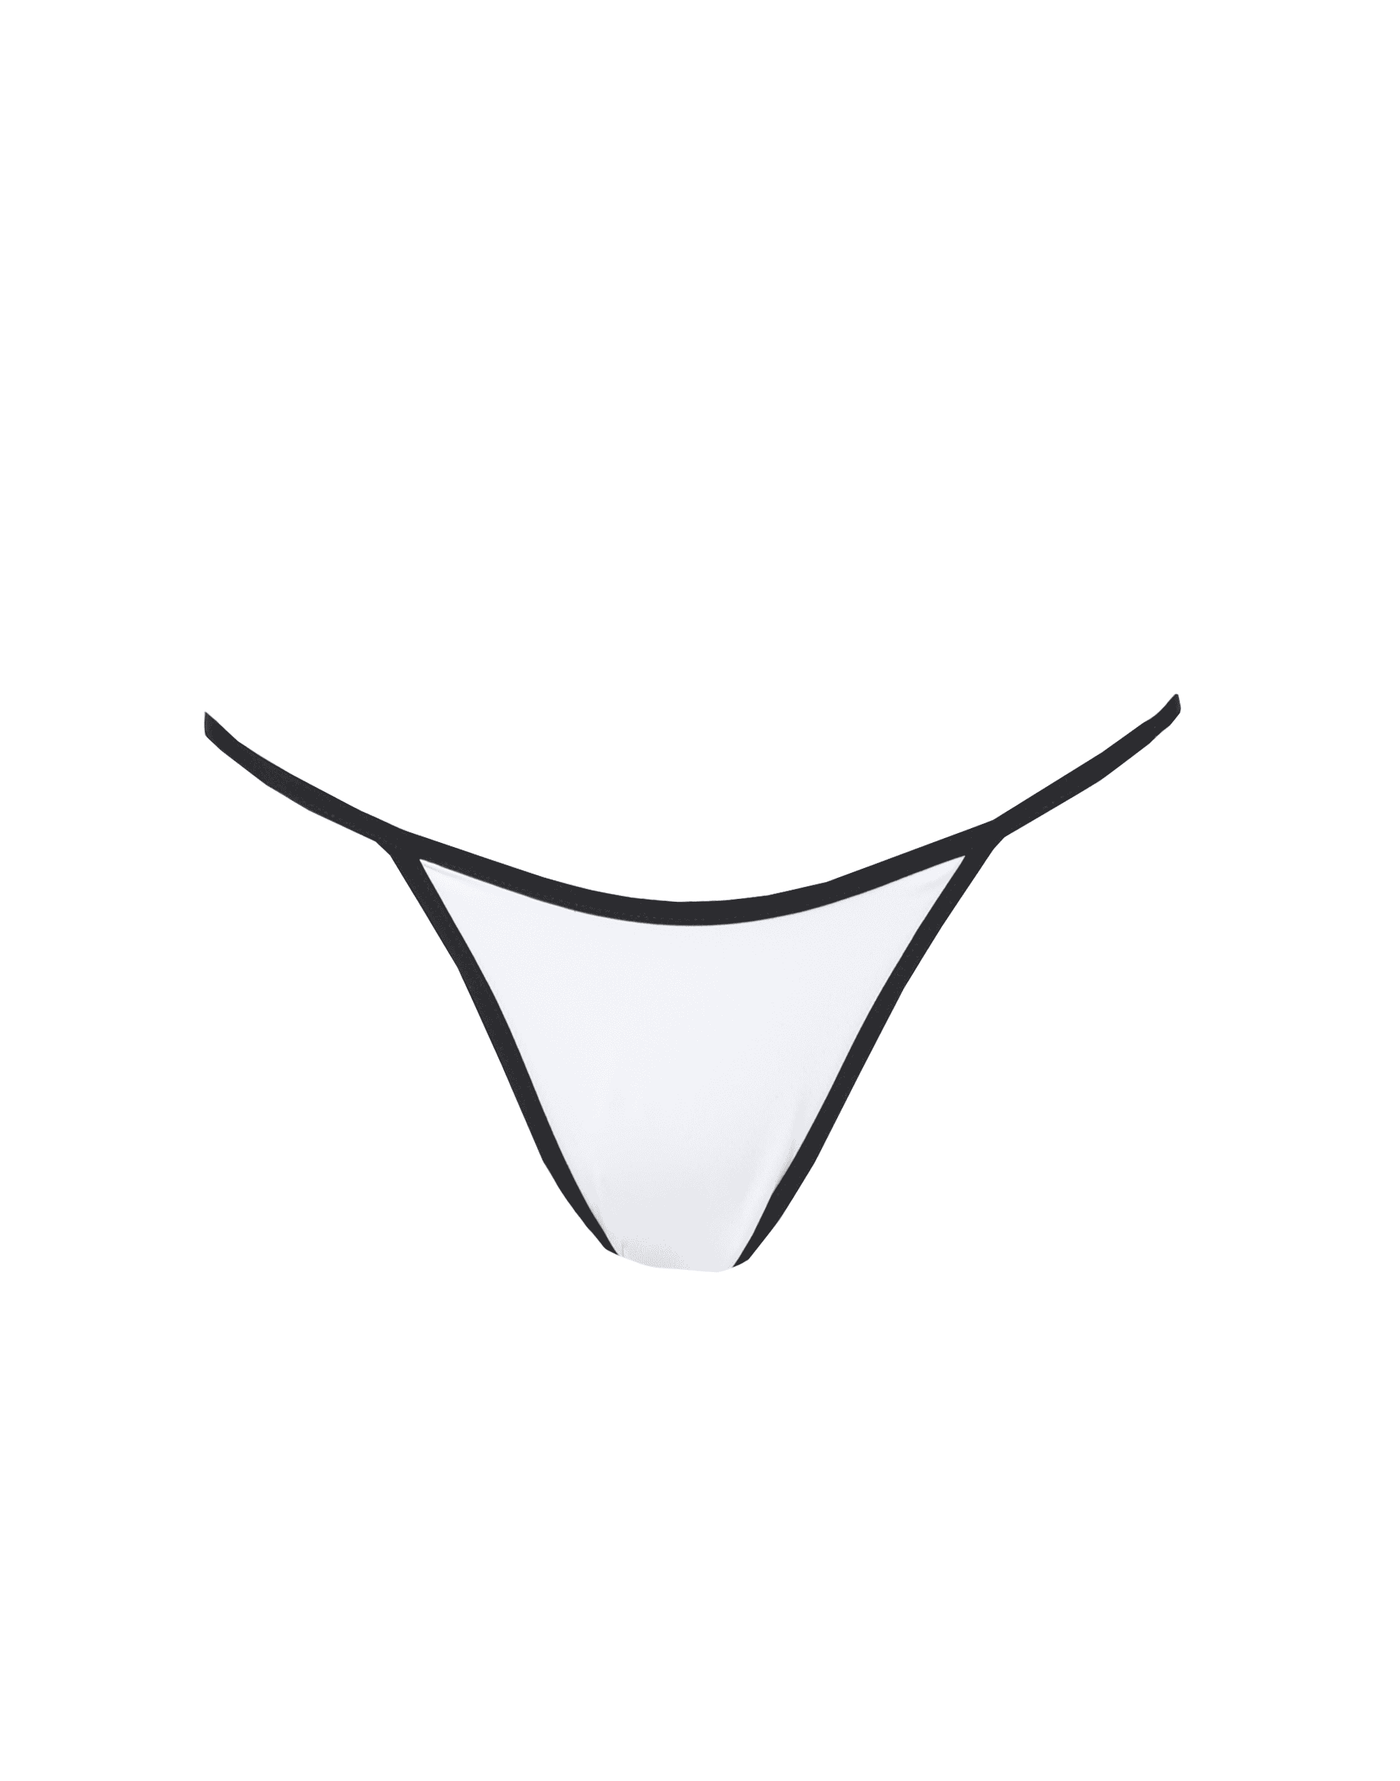 Anchors Away Bikini Bottoms (Black/White) - Reversible Adjustable Waist Bikini Bottoms - Women's Swim - Charcoal Clothing mix-and-match